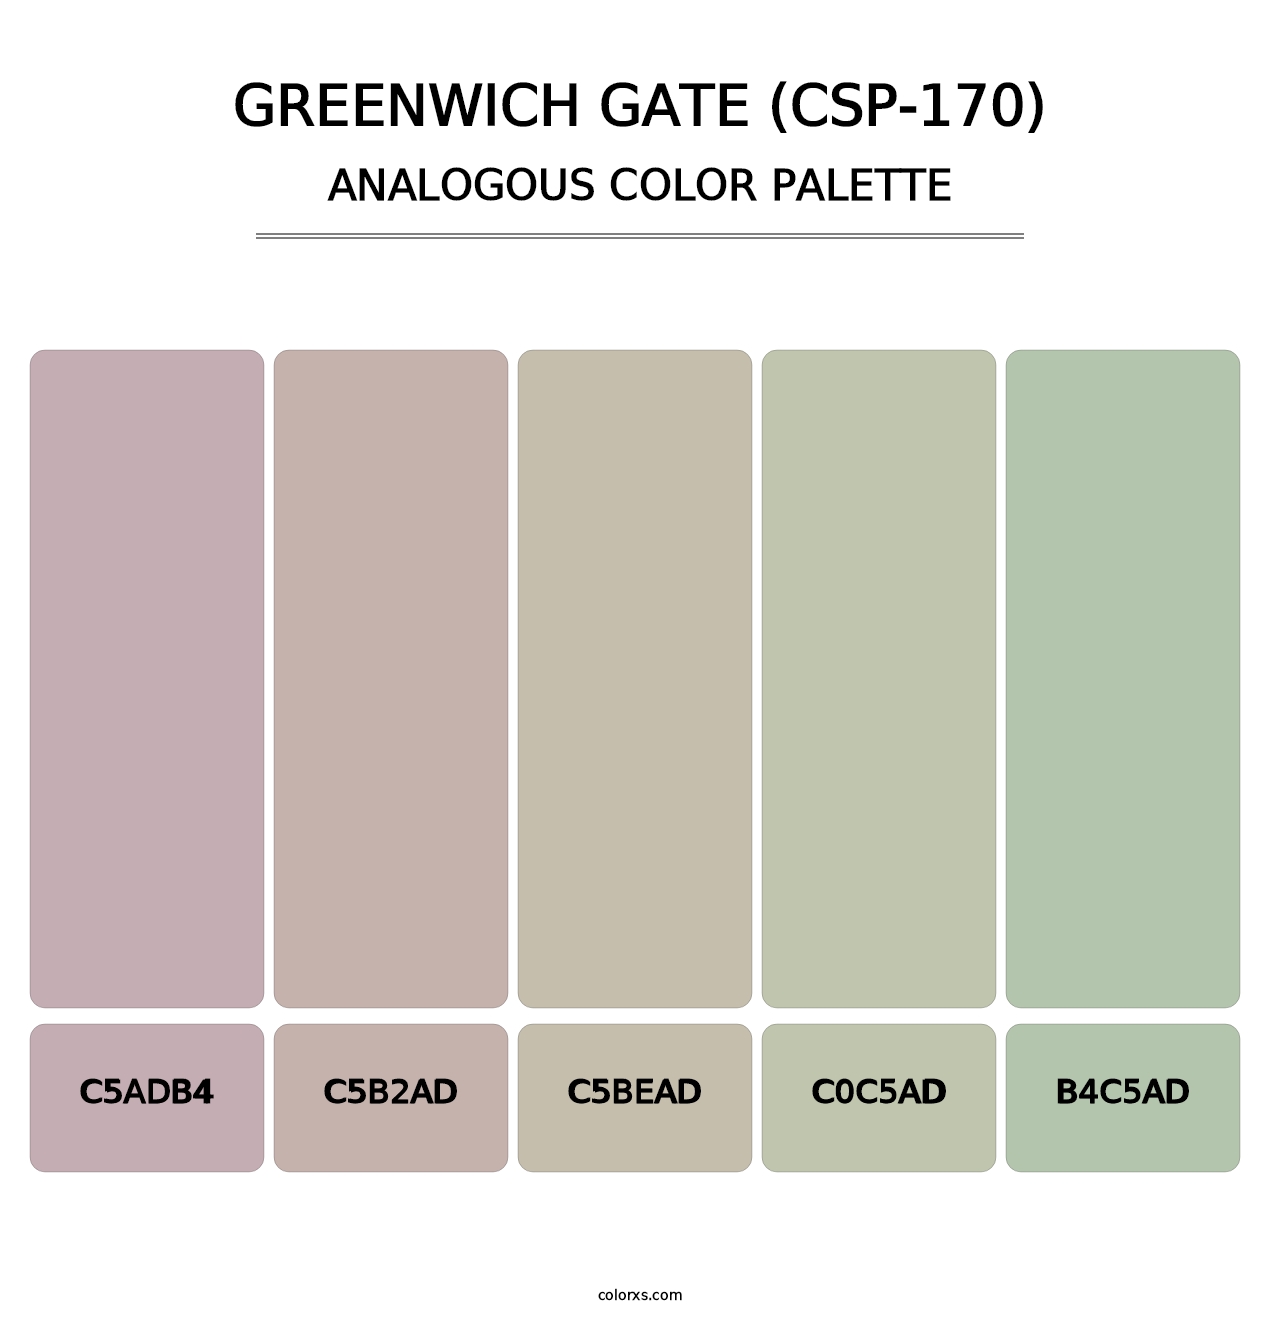 Greenwich Gate (CSP-170) - Analogous Color Palette